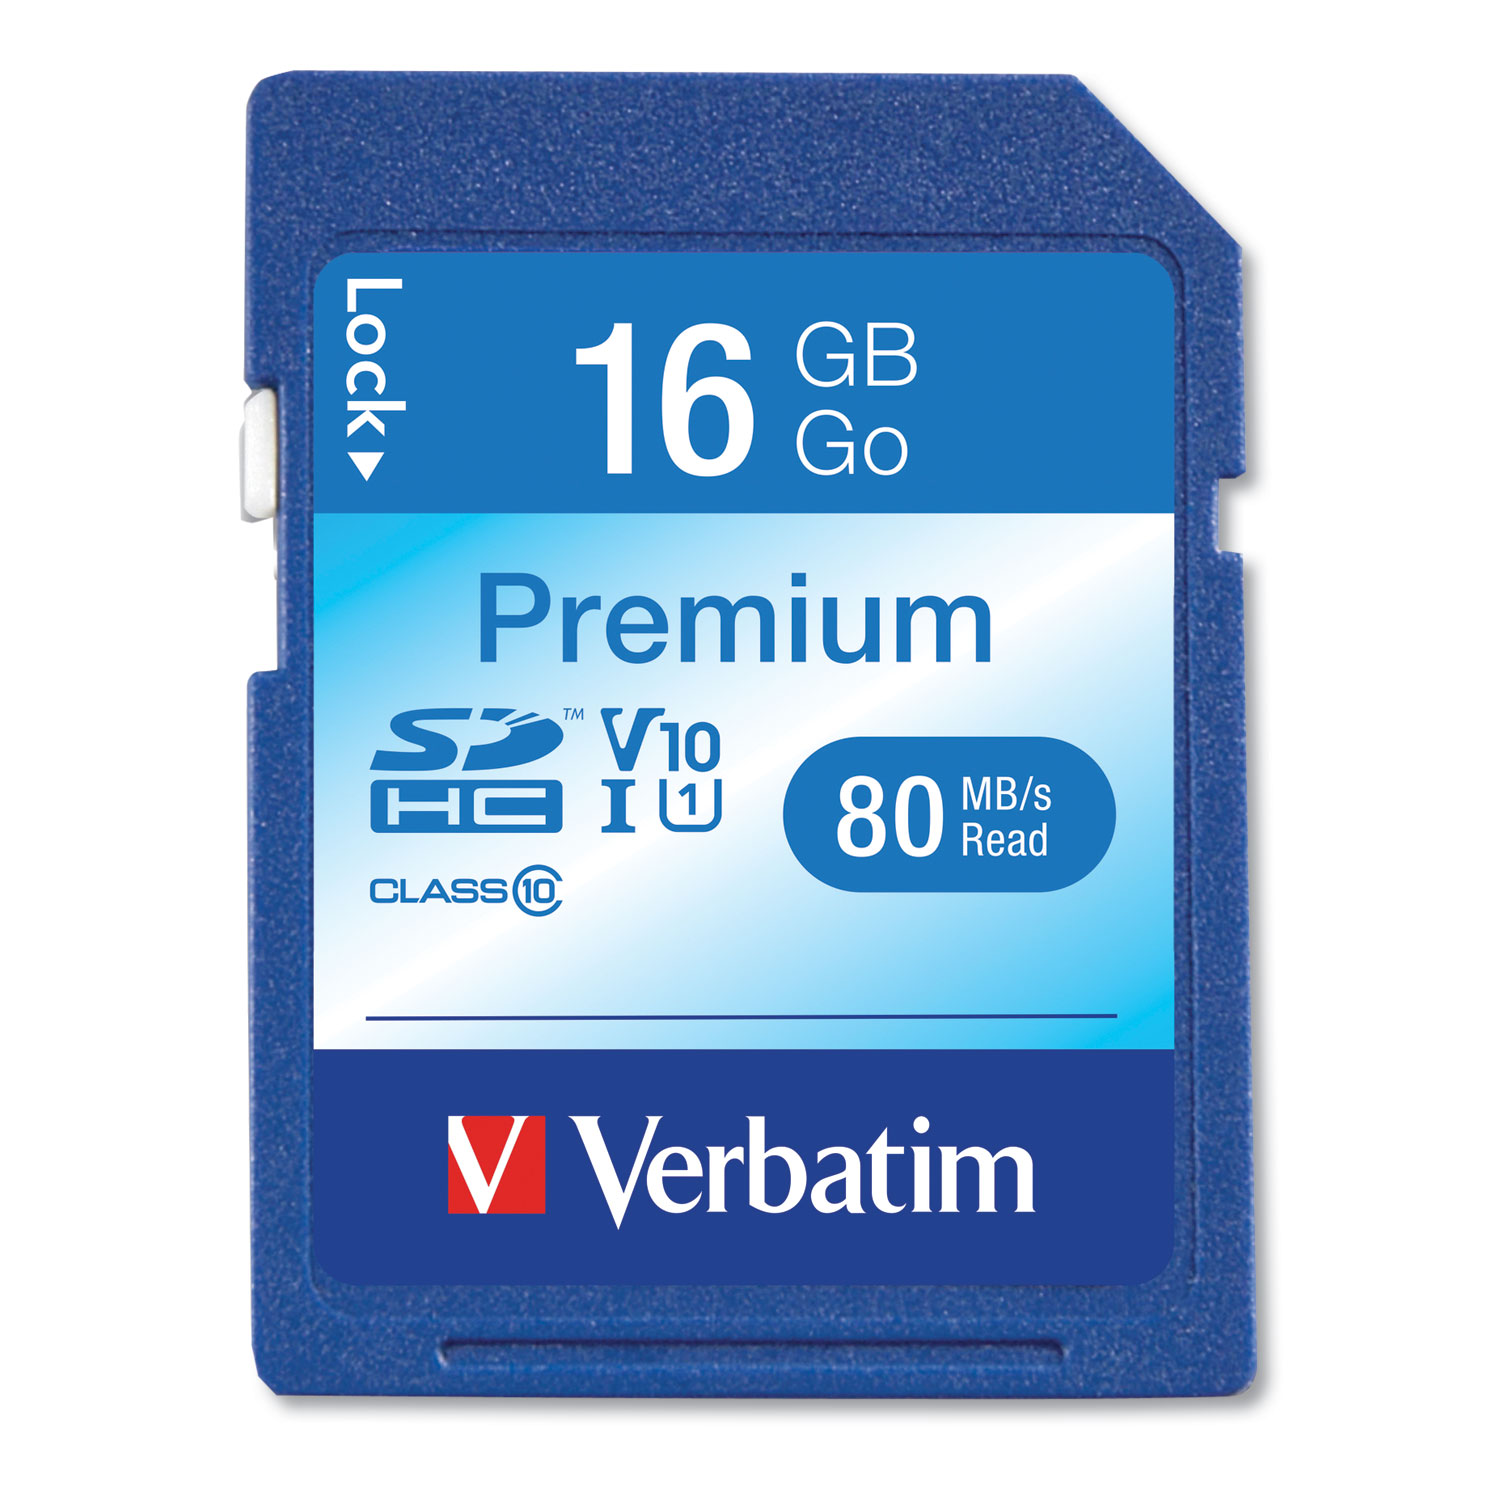  Verbatim 96808 16GB Premium SDHC Memory Card, UHS-I V10 U1 Class 10, Up to 80MB/s Read Speed (VER96808) 